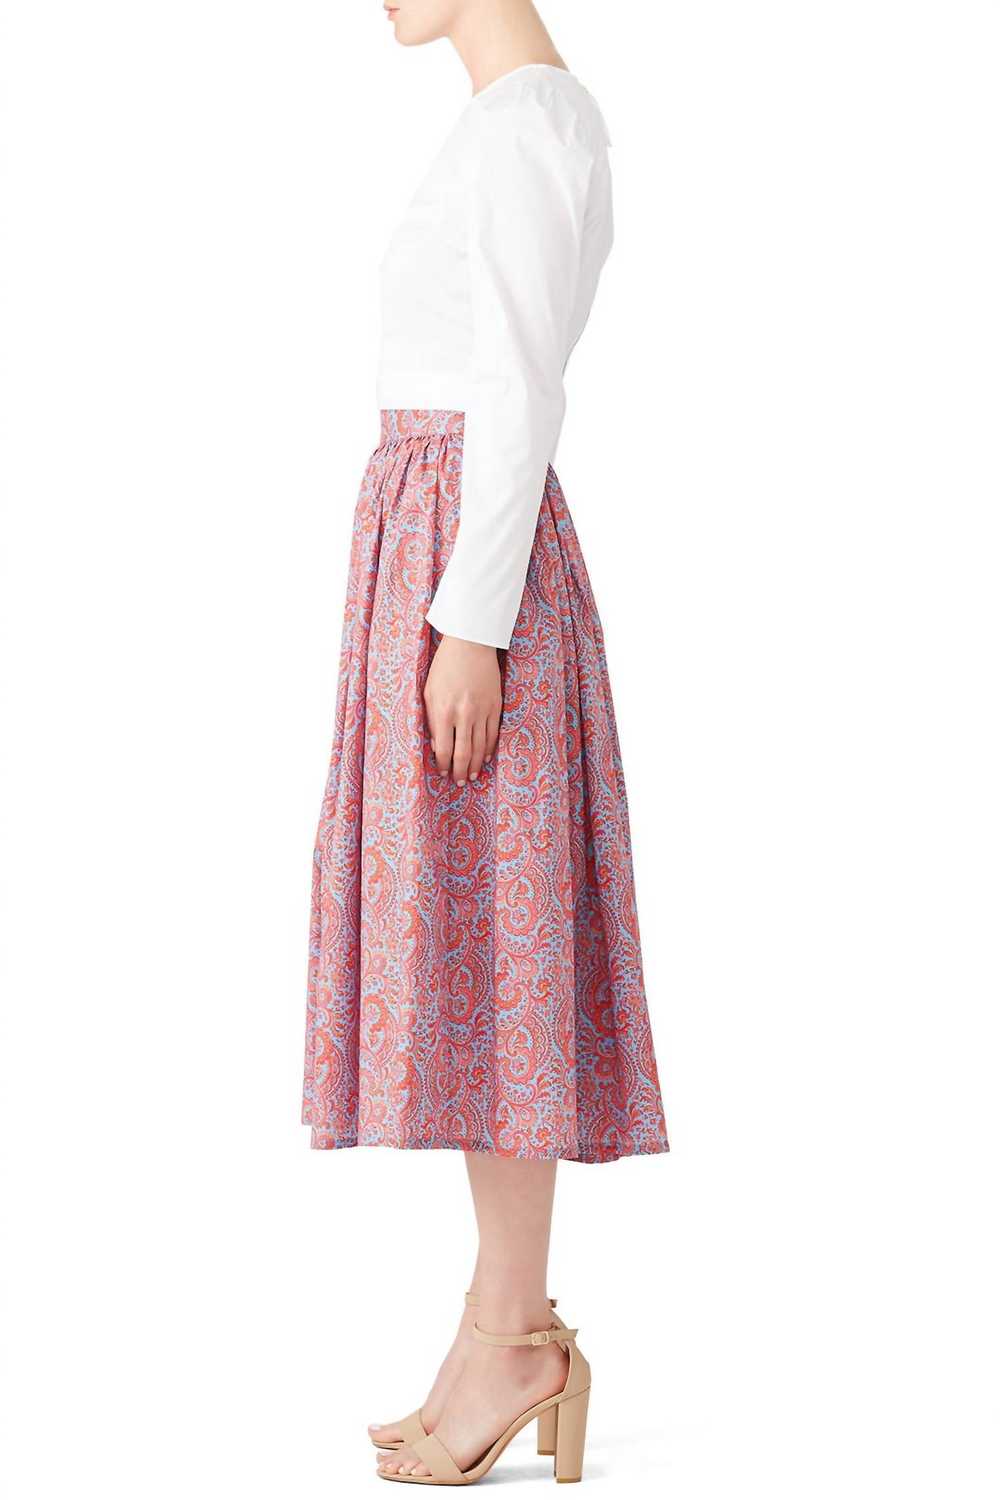 Alcoolique pre-loved mafalda midi skirt for women - image 3